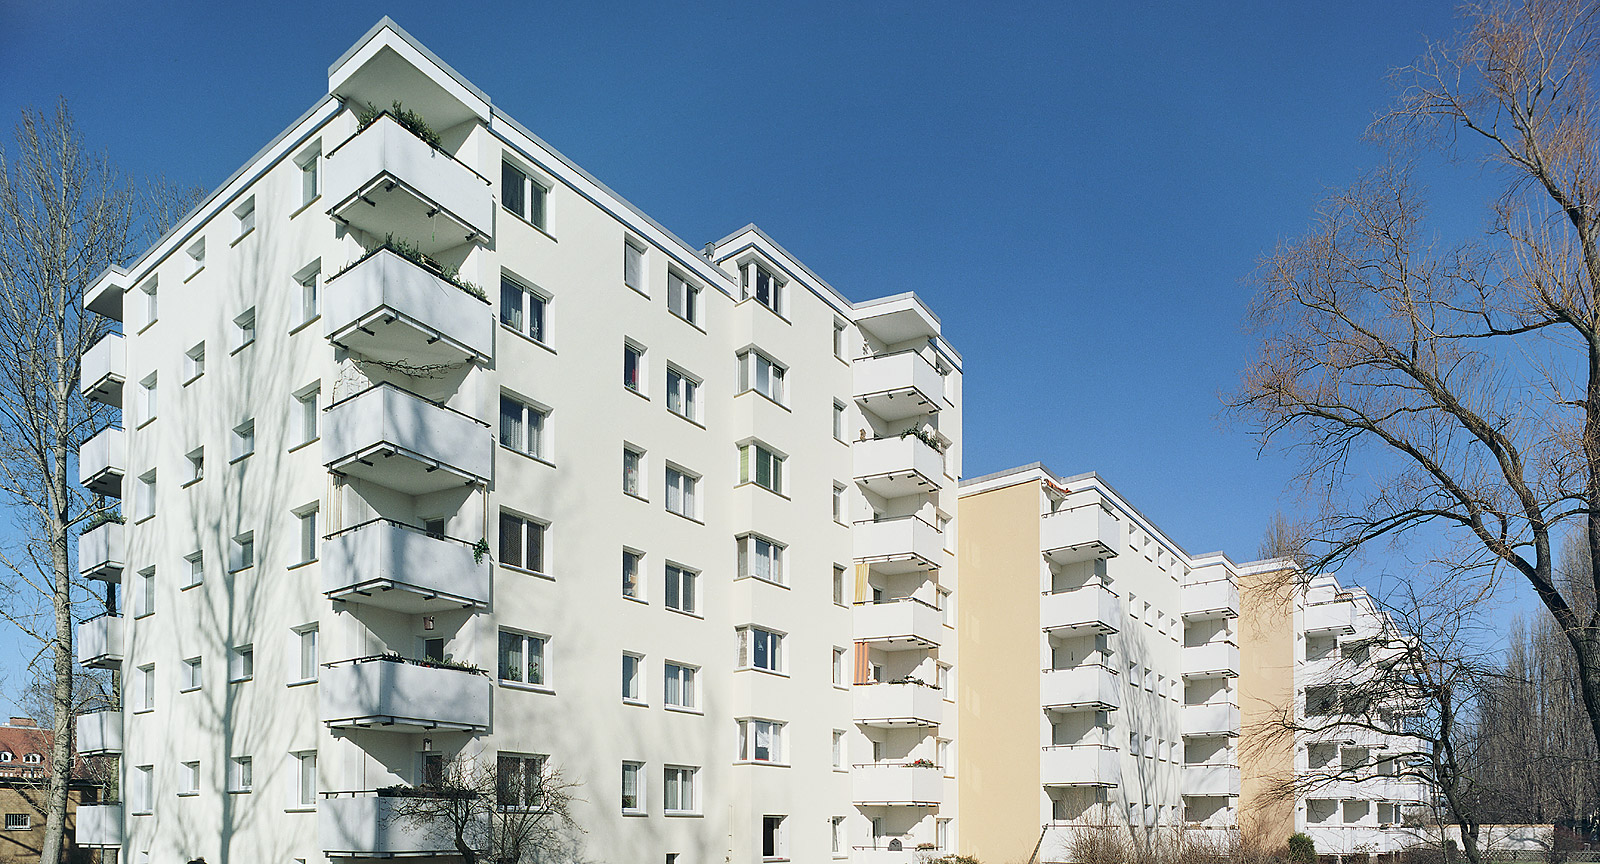 Wohnhaus Windhalmweg 5-11, Berlin-Reinickendorf